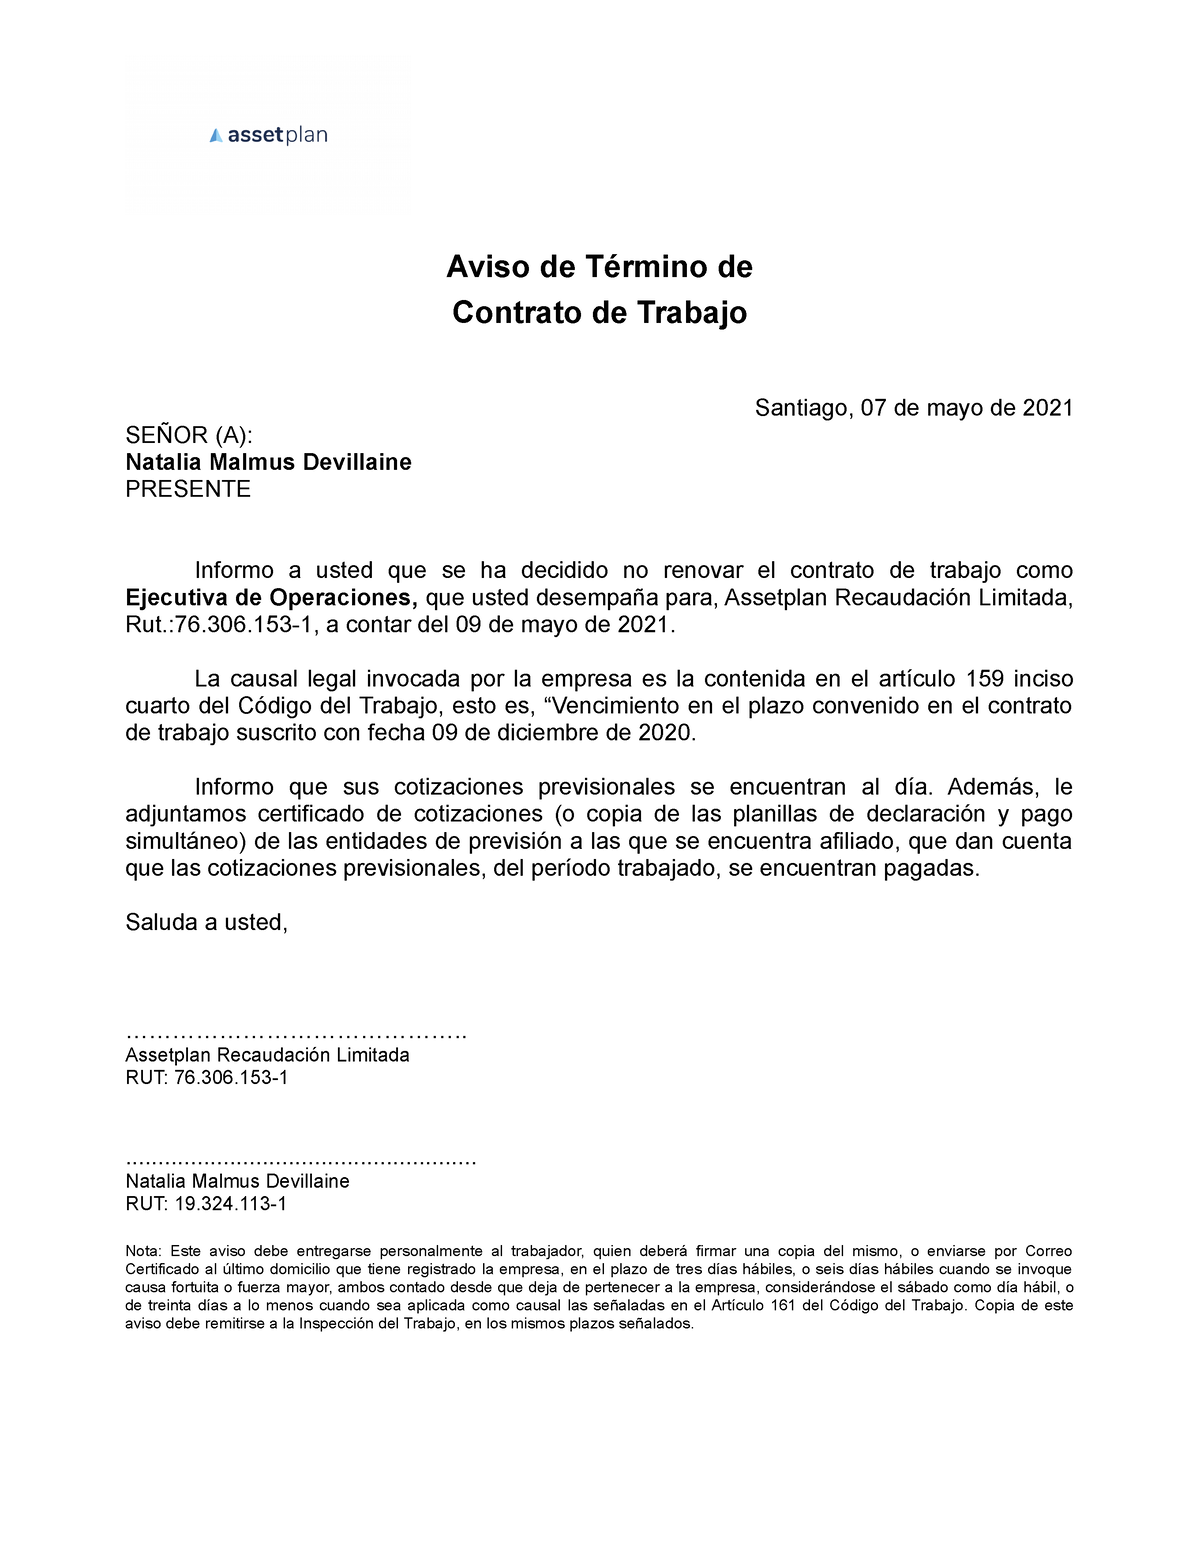 Carta Aviso modelo de contrato Aviso de Término de Contrato de Trabajo Santiago de mayo